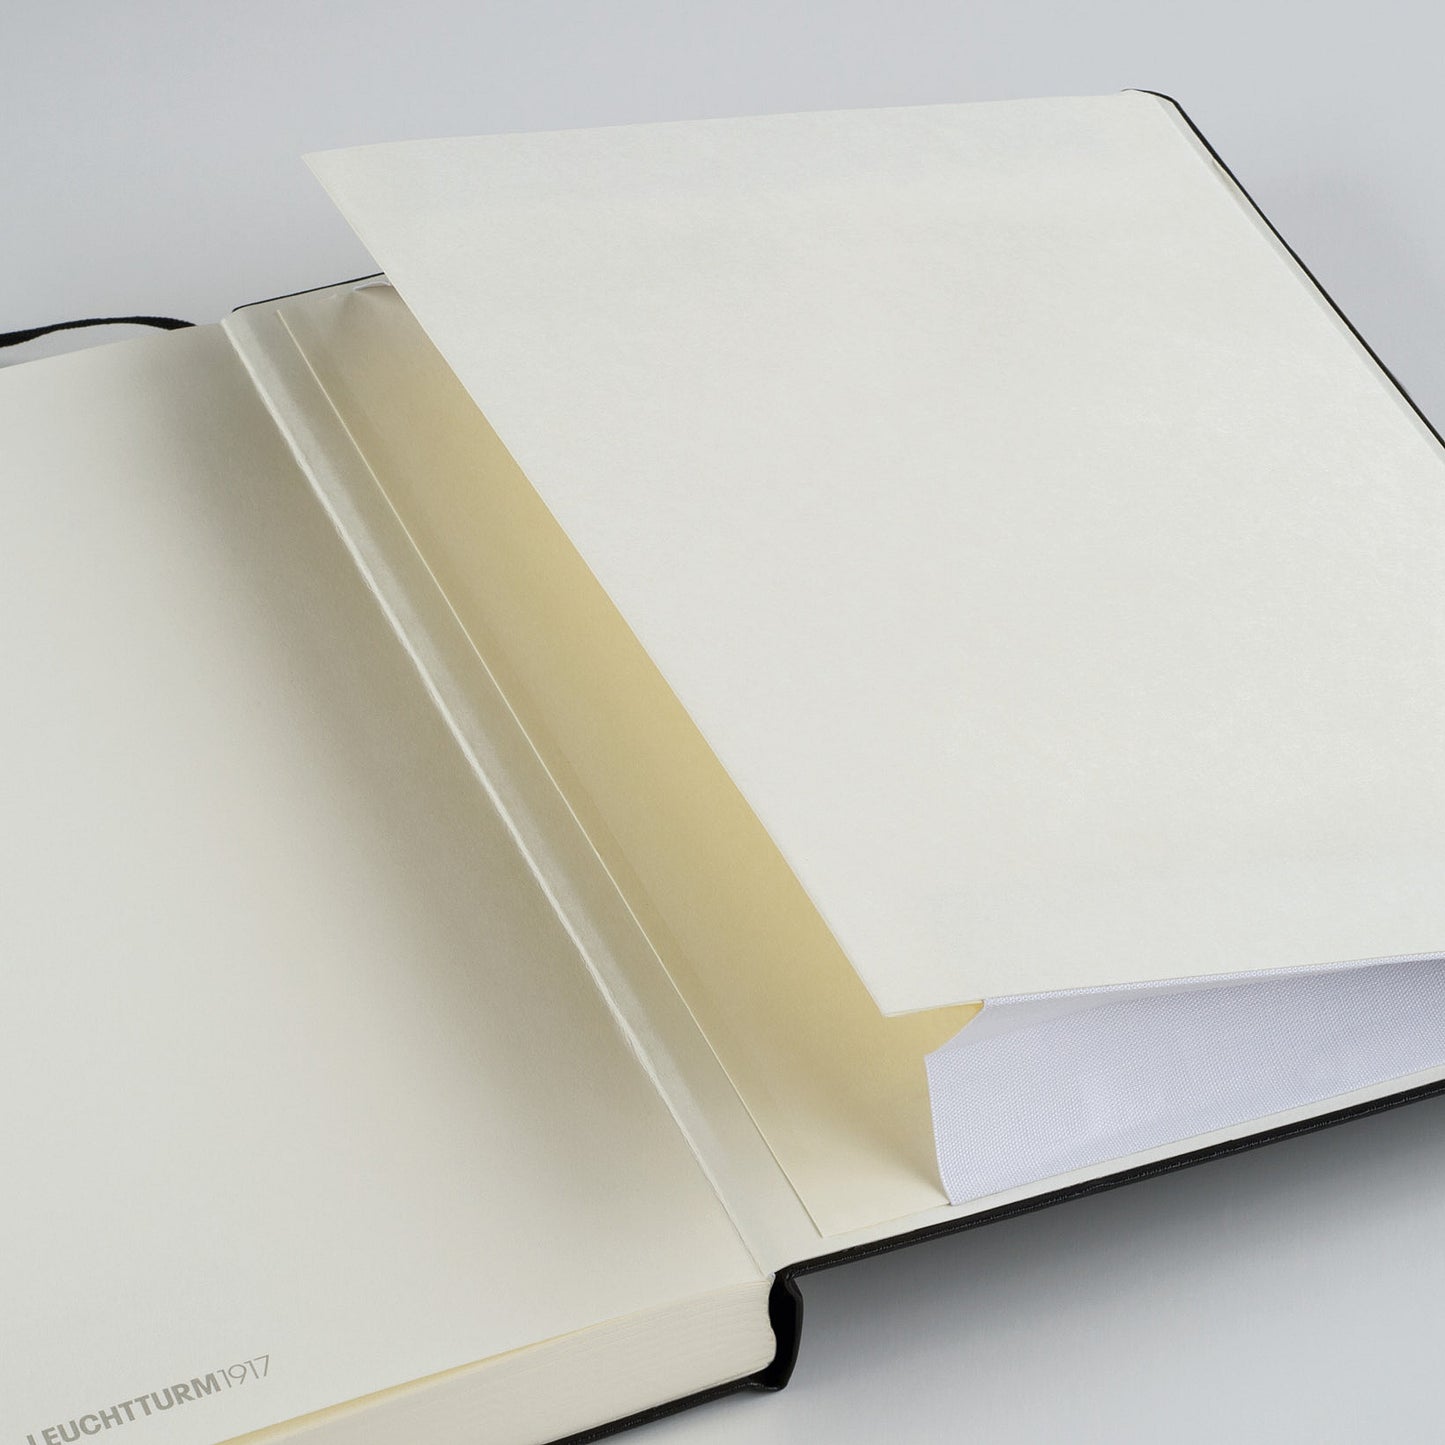 Leuchtturm1917 A6 Pocket Hardcover Notebook - Navy / Plain